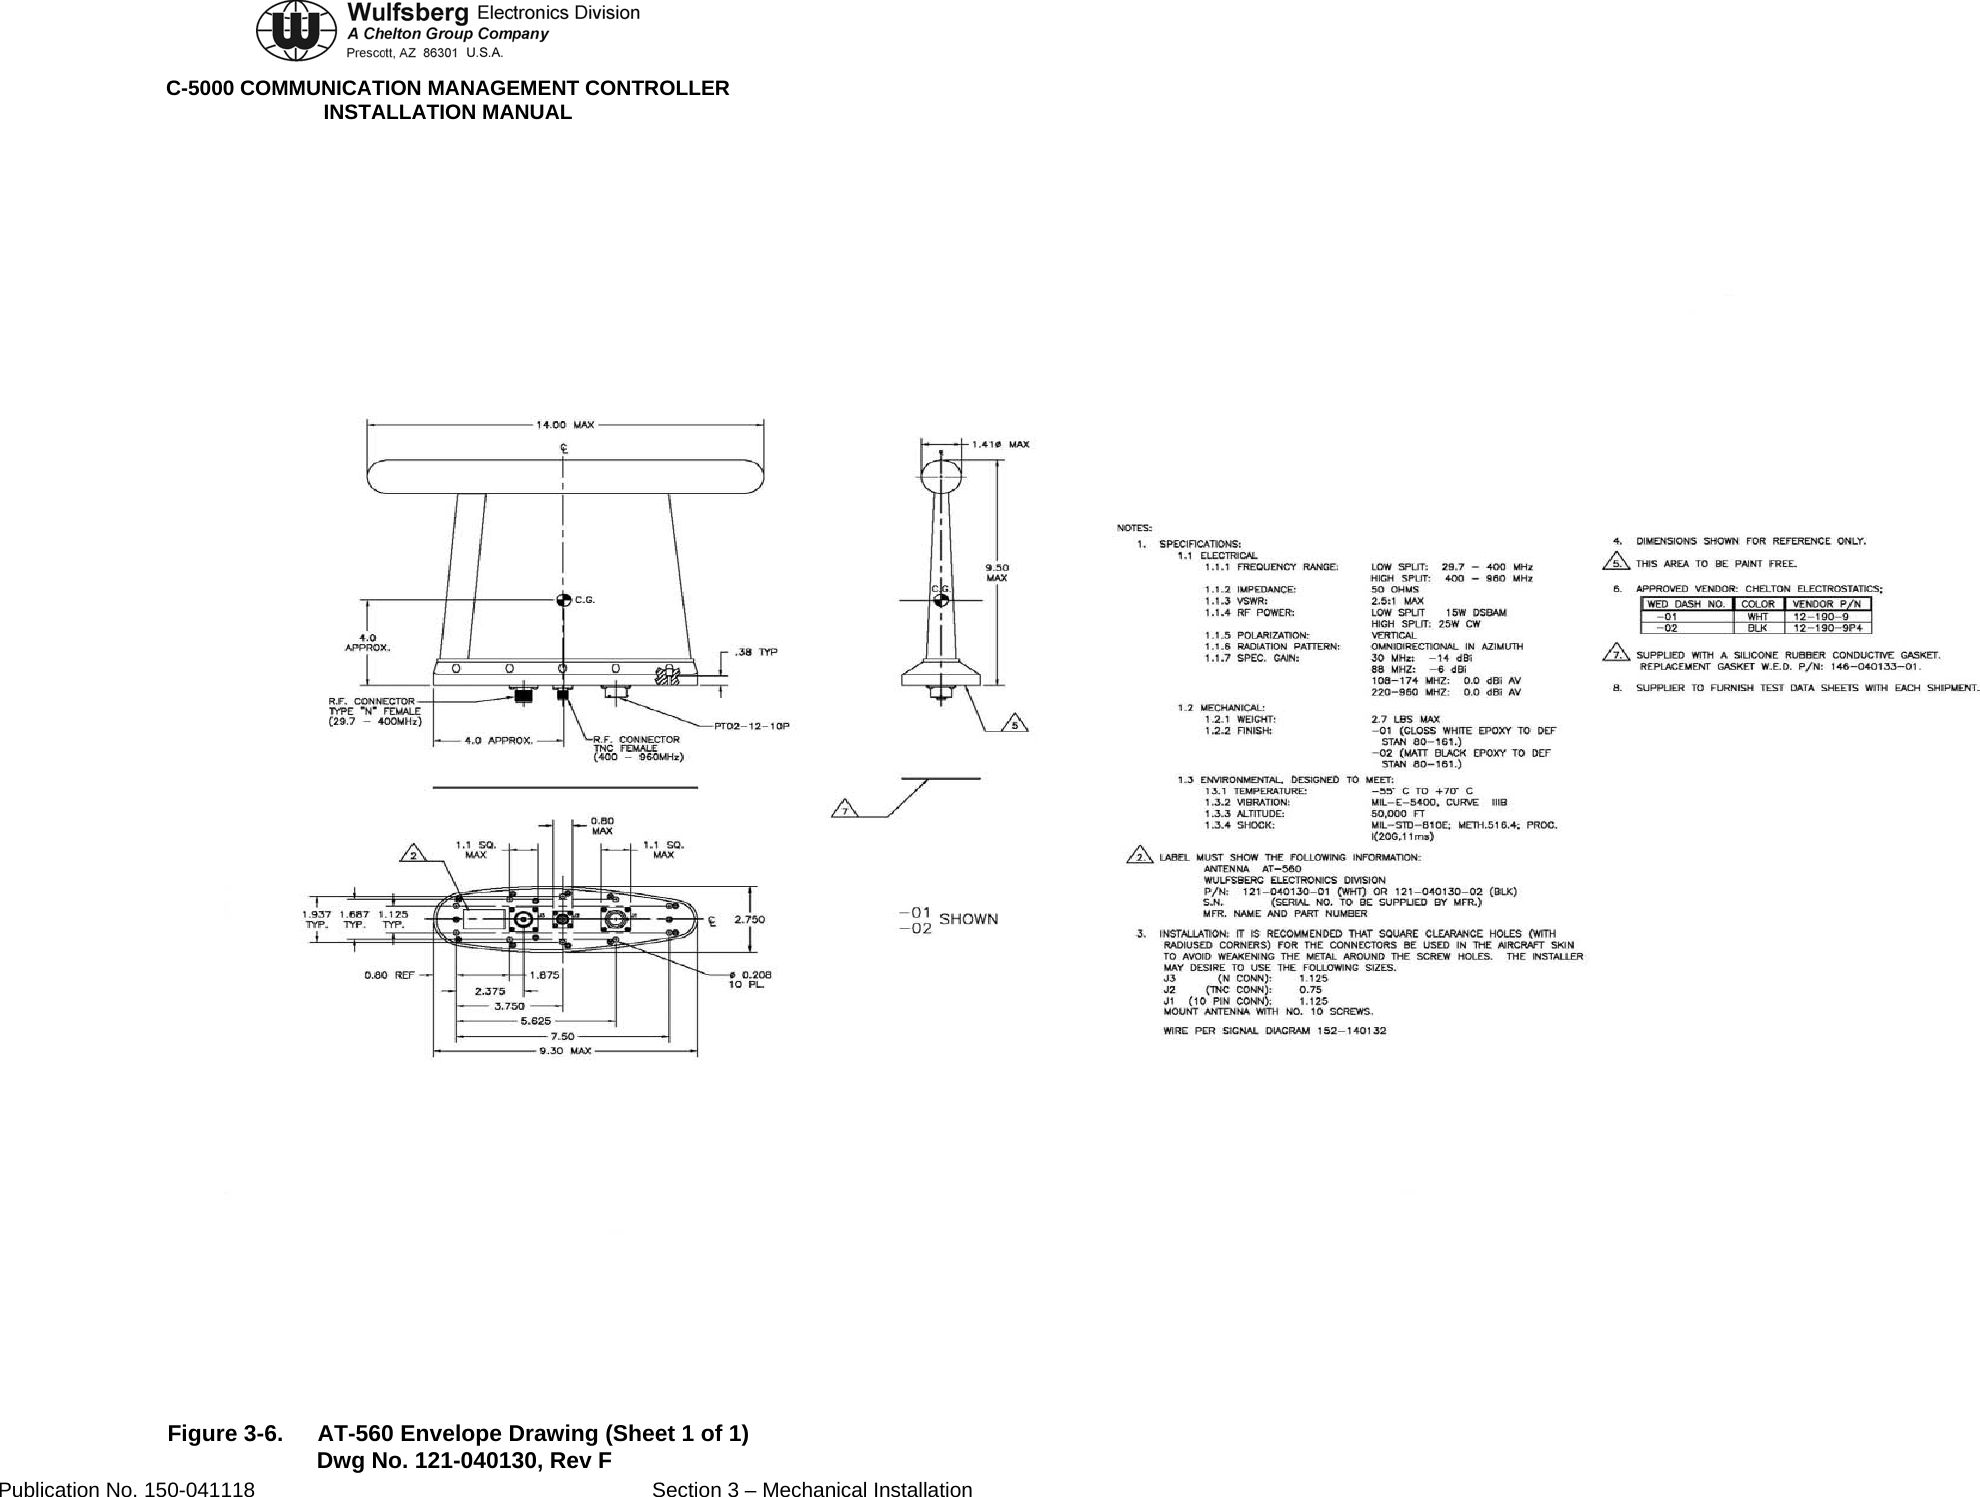  C-5000 COMMUNICATION MANAGEMENT CONTROLLER INSTALLATION MANUAL  Figure 3-6.  AT-560 Envelope Drawing (Sheet 1 of 1) Publication No. 150-041118  Section 3 – Mechanical Installation Dwg No. 121-040130, Rev F 